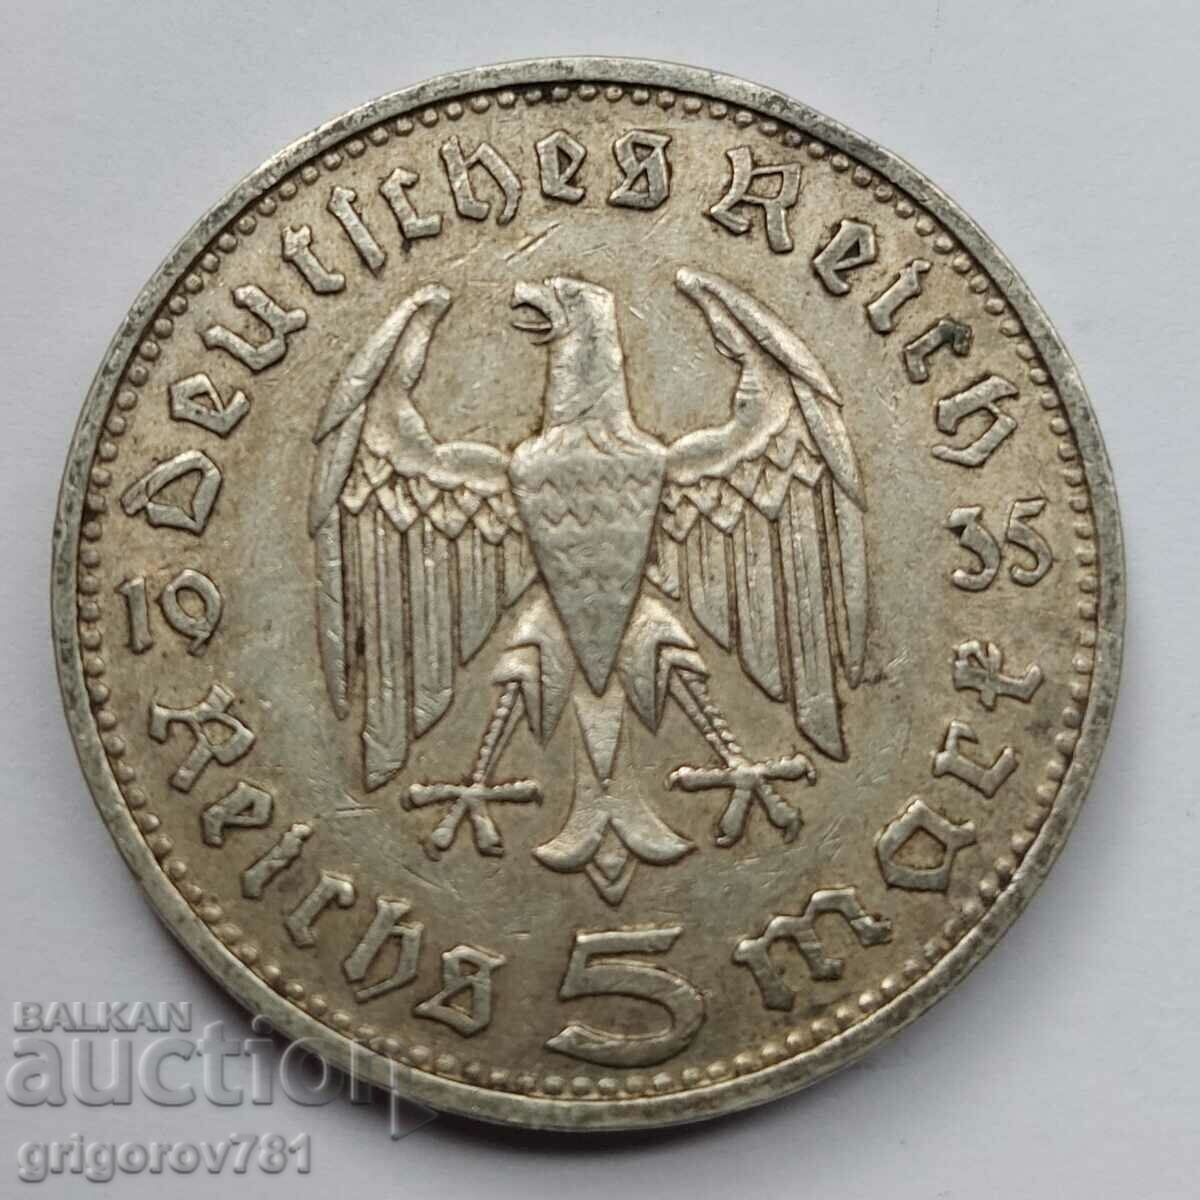 5 Mark Silver Γερμανία 1935 D III Reich Ασημένιο νόμισμα #67